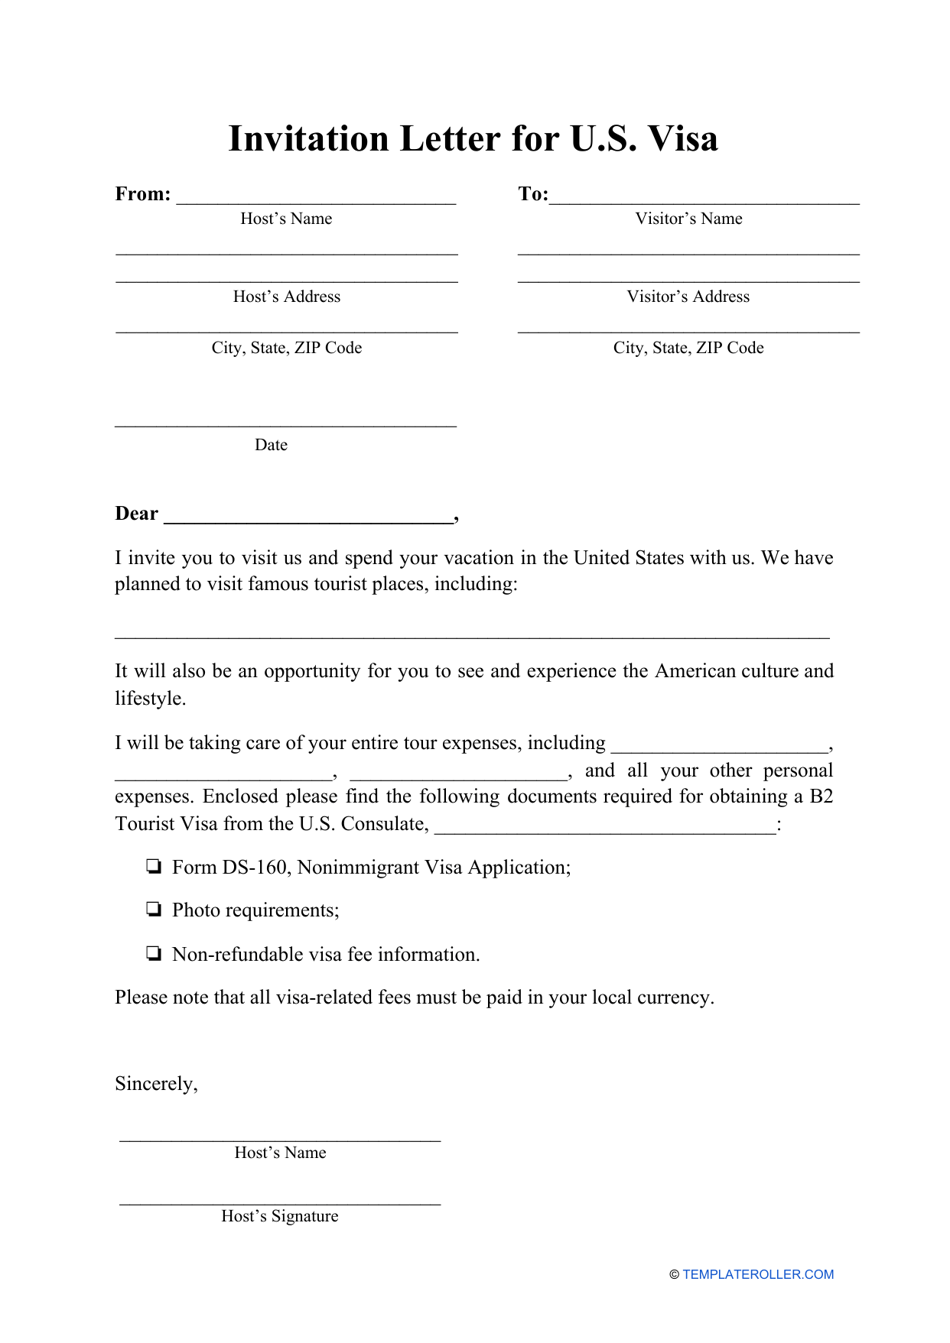 Invitation Letter for U.S. Visa Template, Page 1